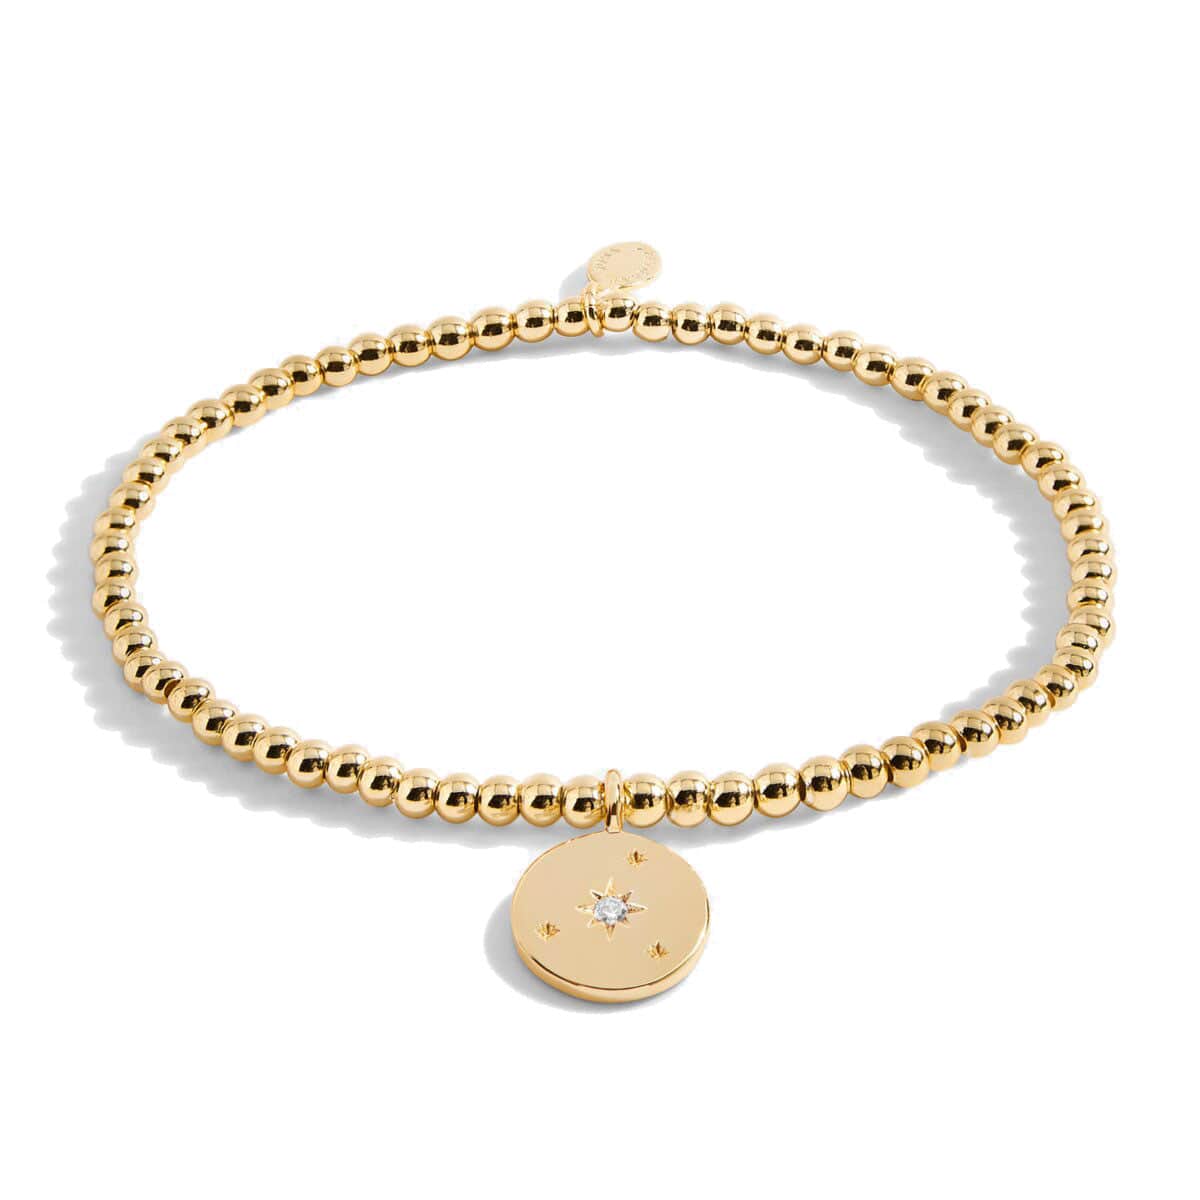 Joma Jewellery Bracelet Joma Jewellery Gold Plated Bracelet - A Little Live in the Moment